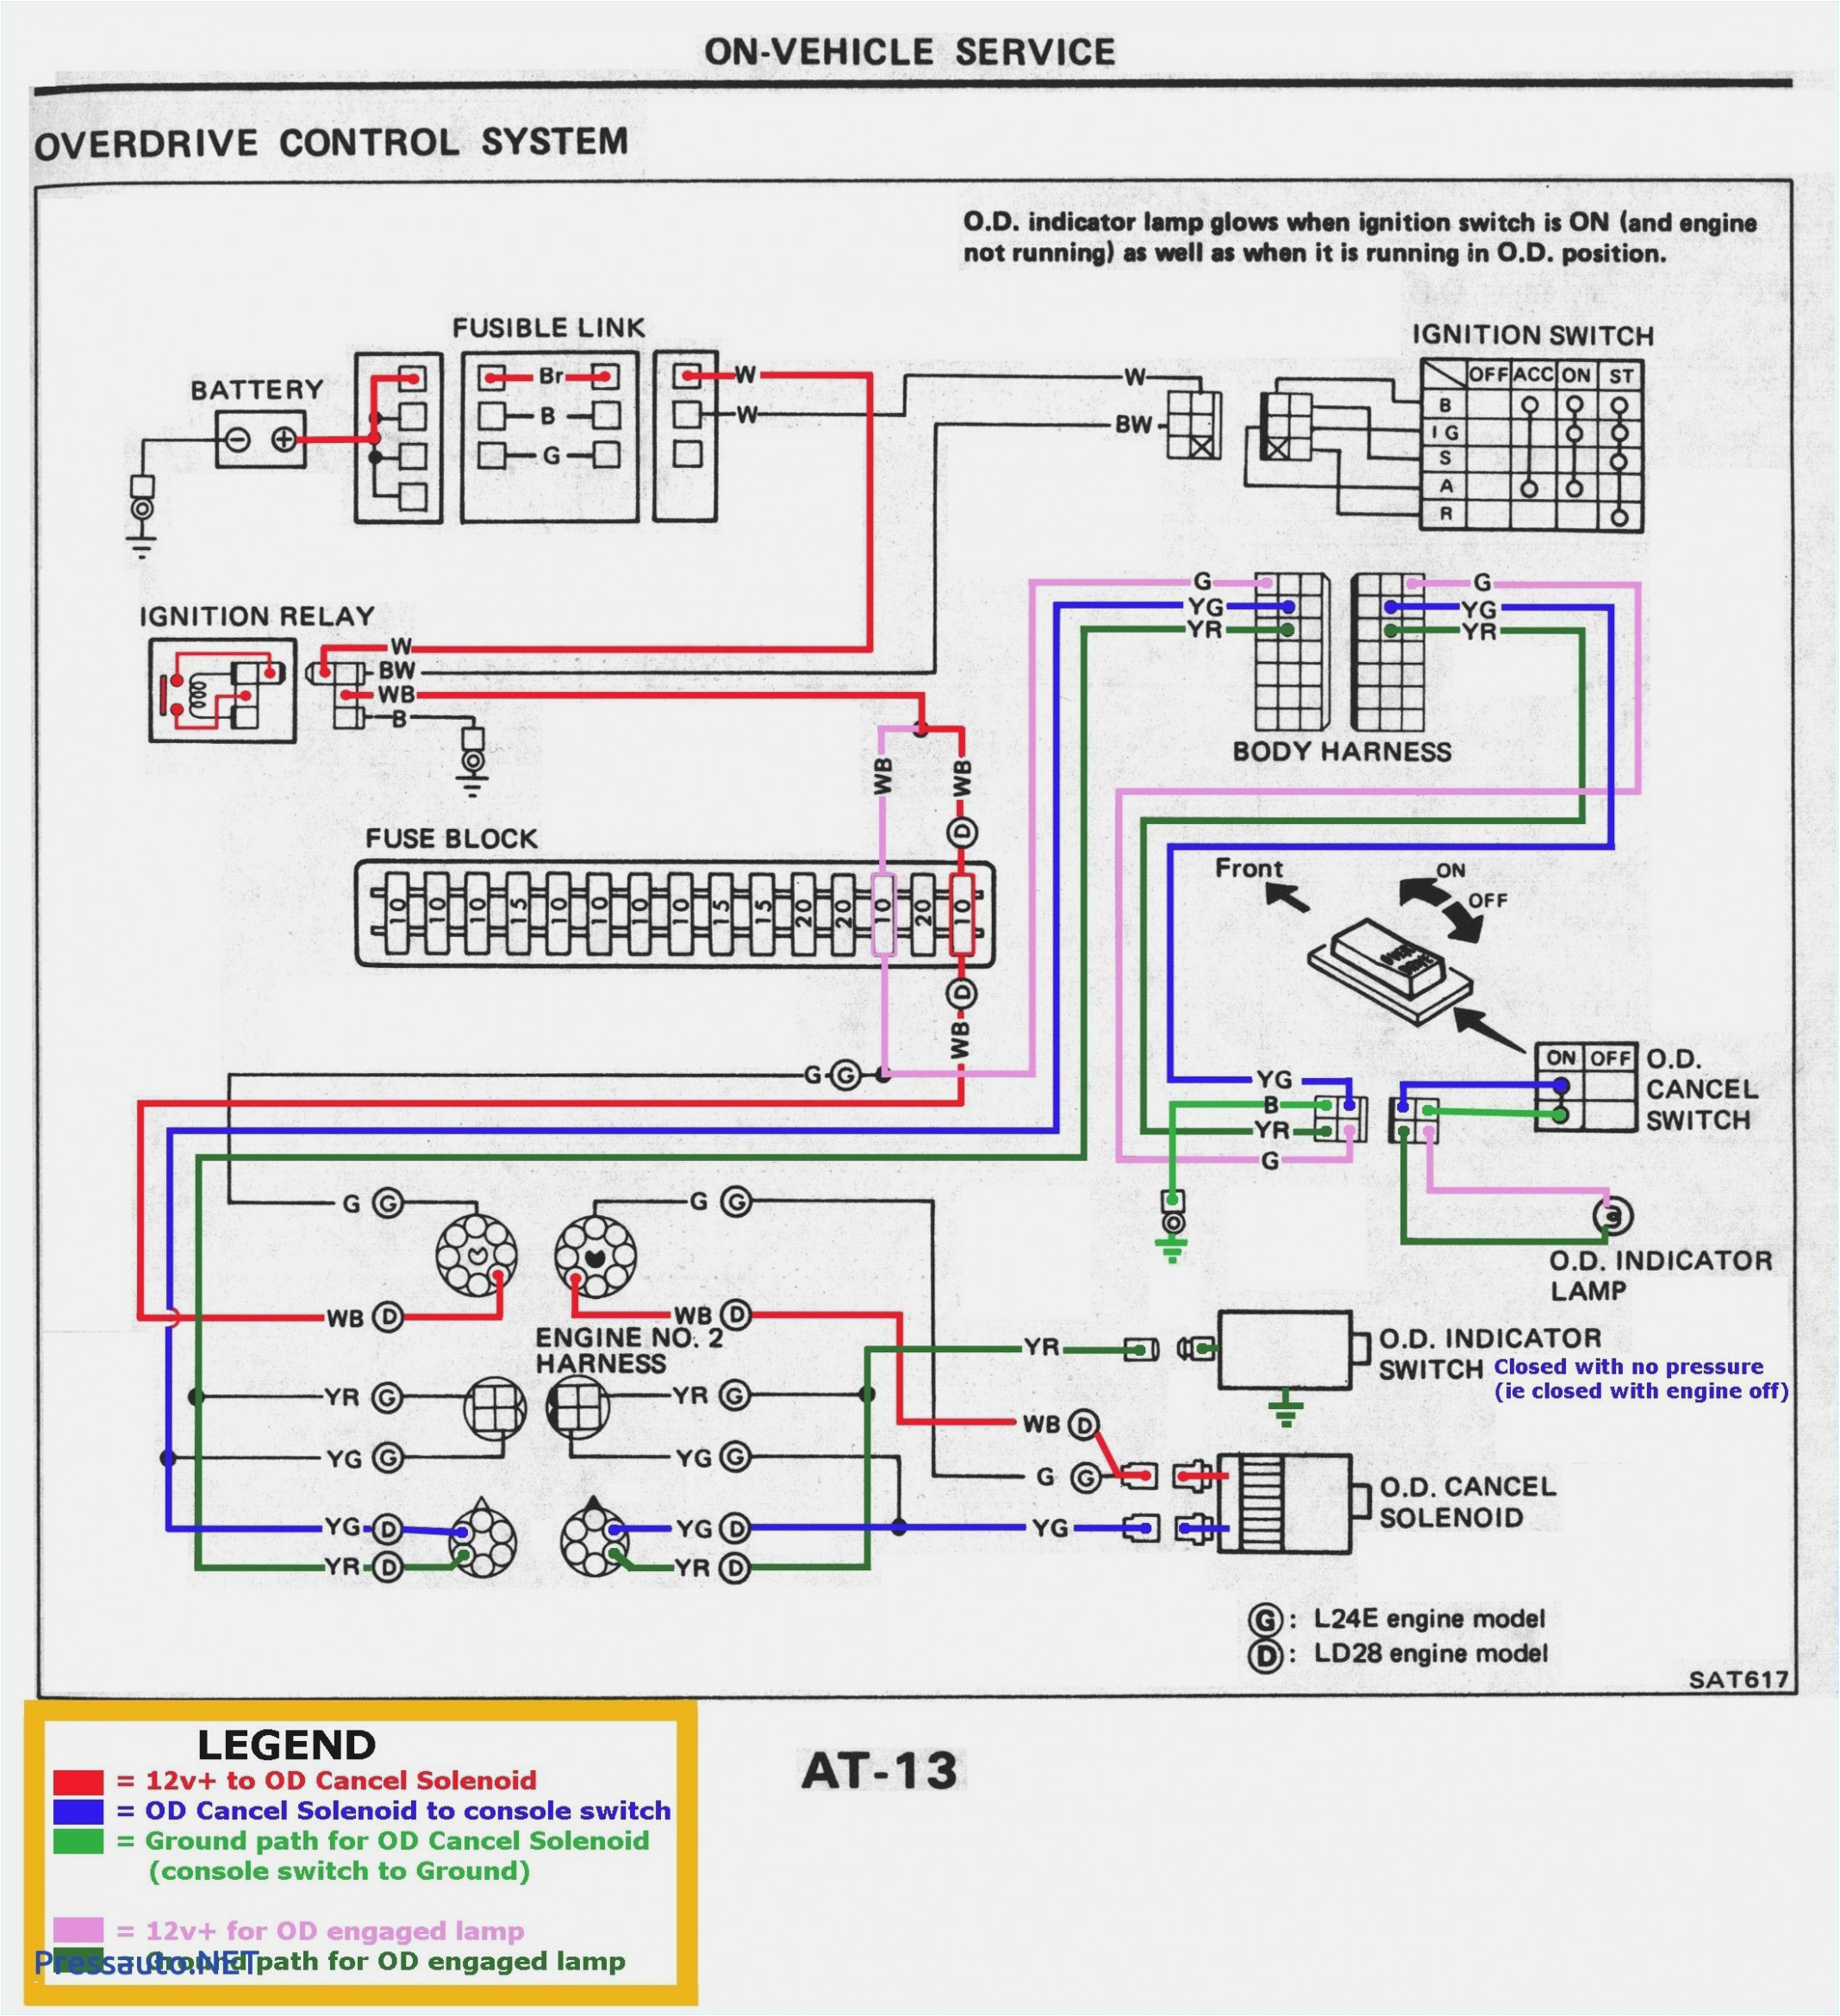 m416 wiring diagram wiring diagram technic m416 trailer wiring diagram m416 wiring diagram